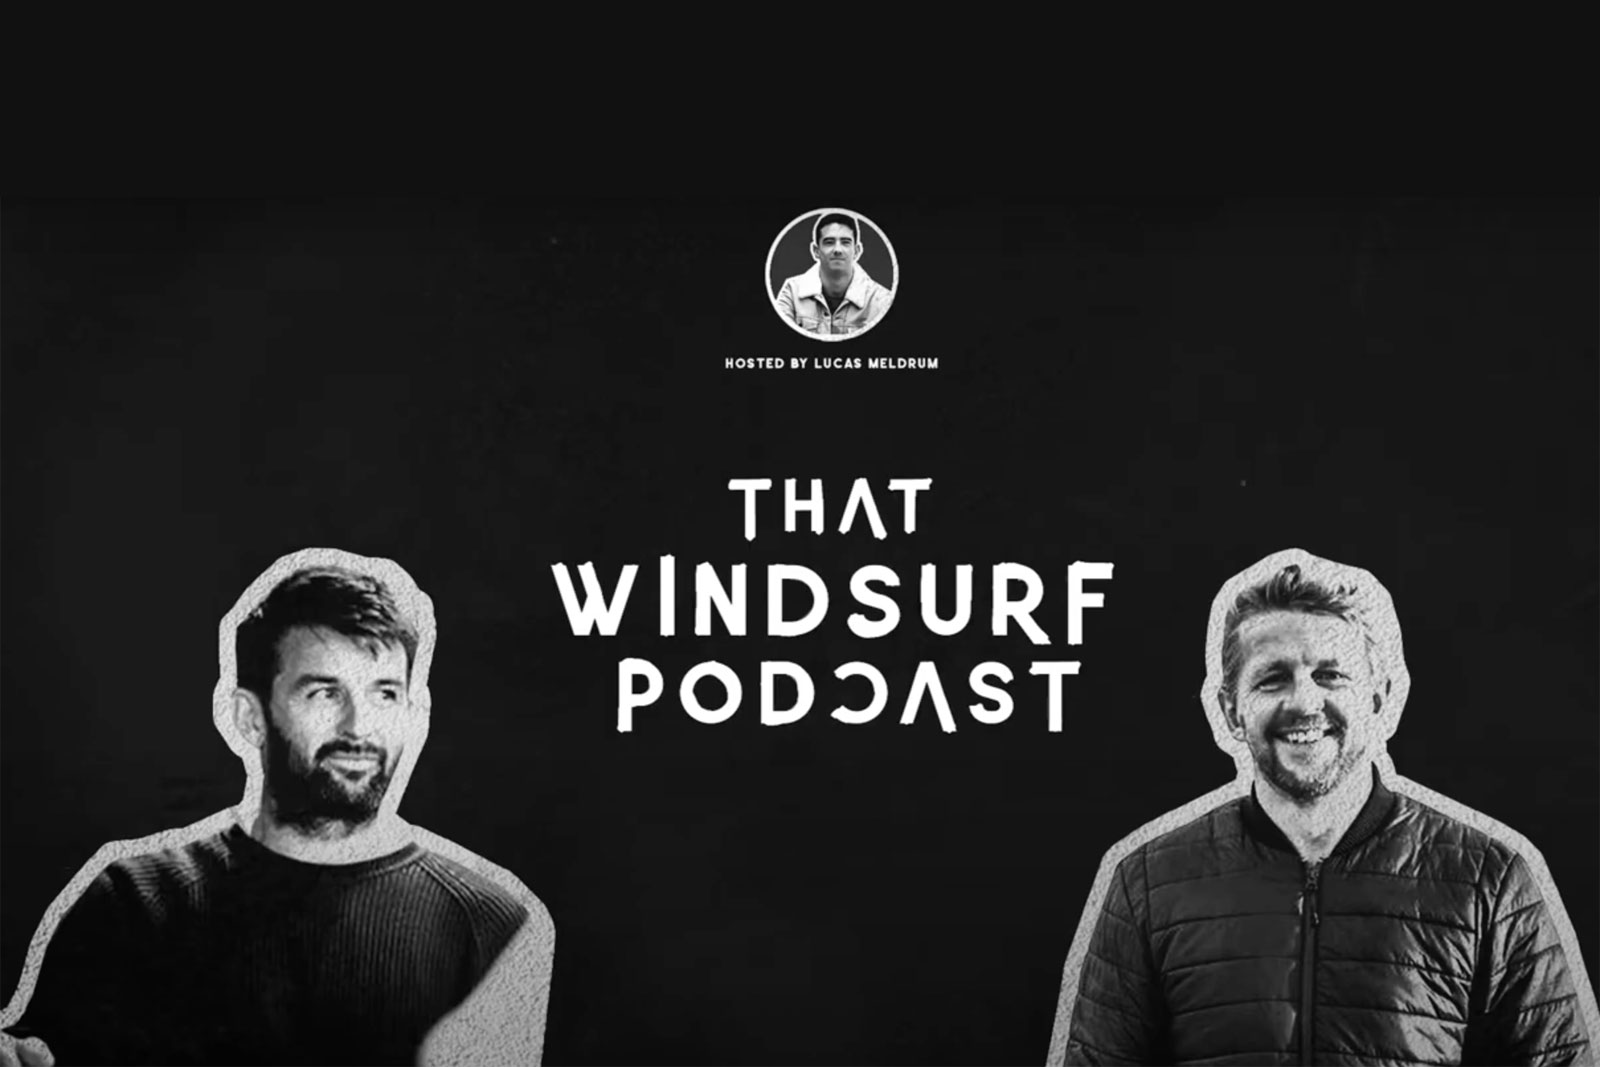 That Windsurf Podcast